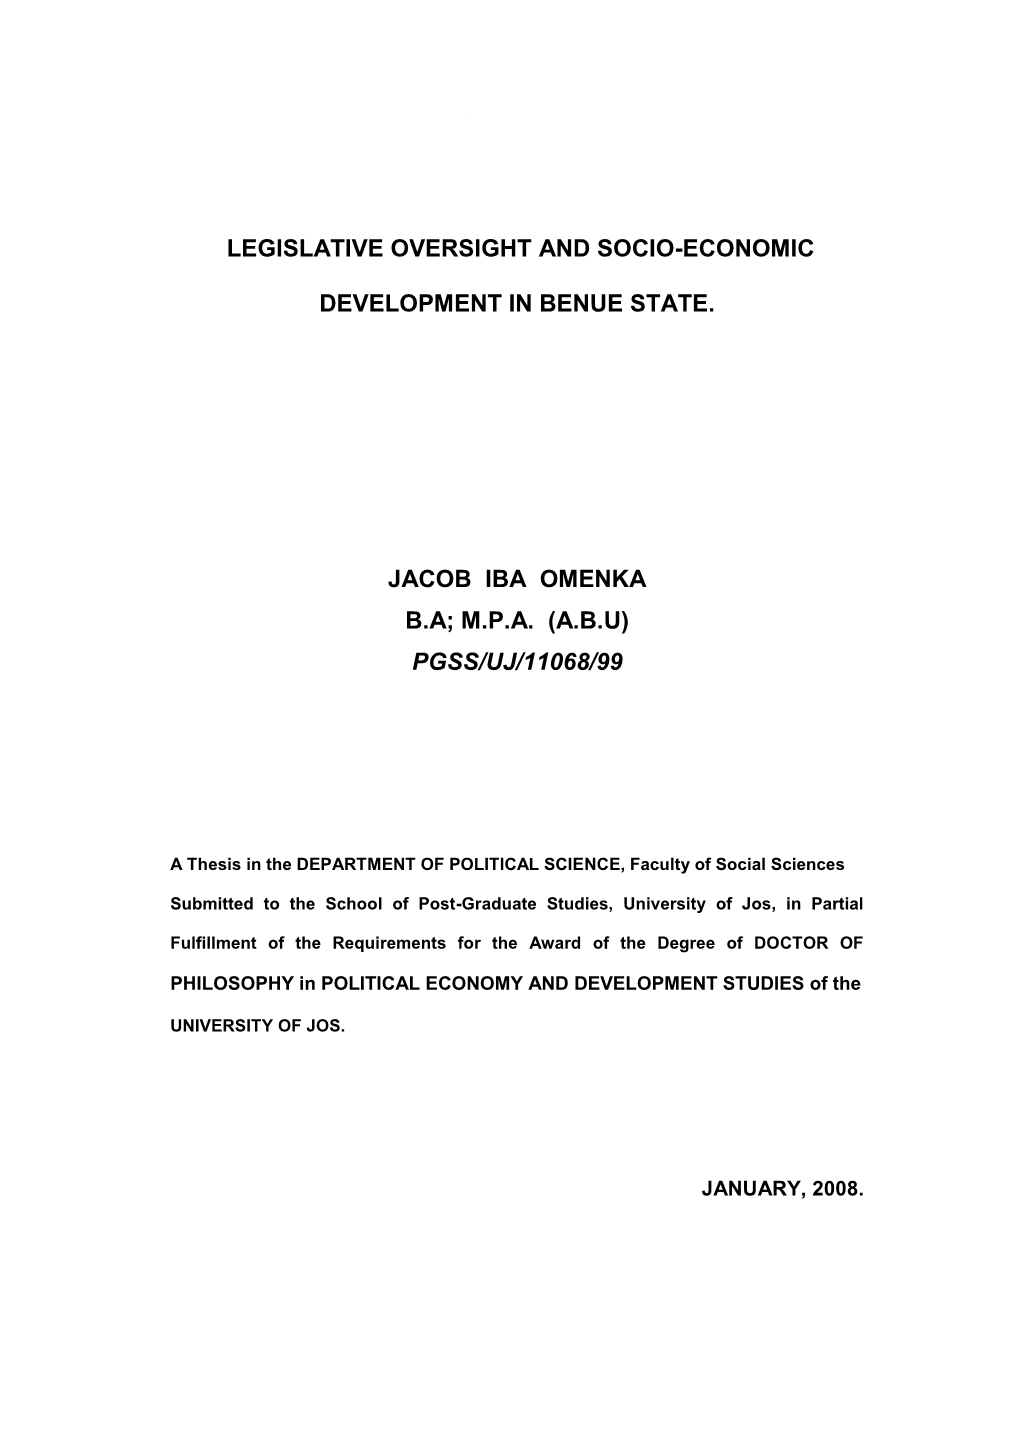 The Legislature and Socio-Economic Development